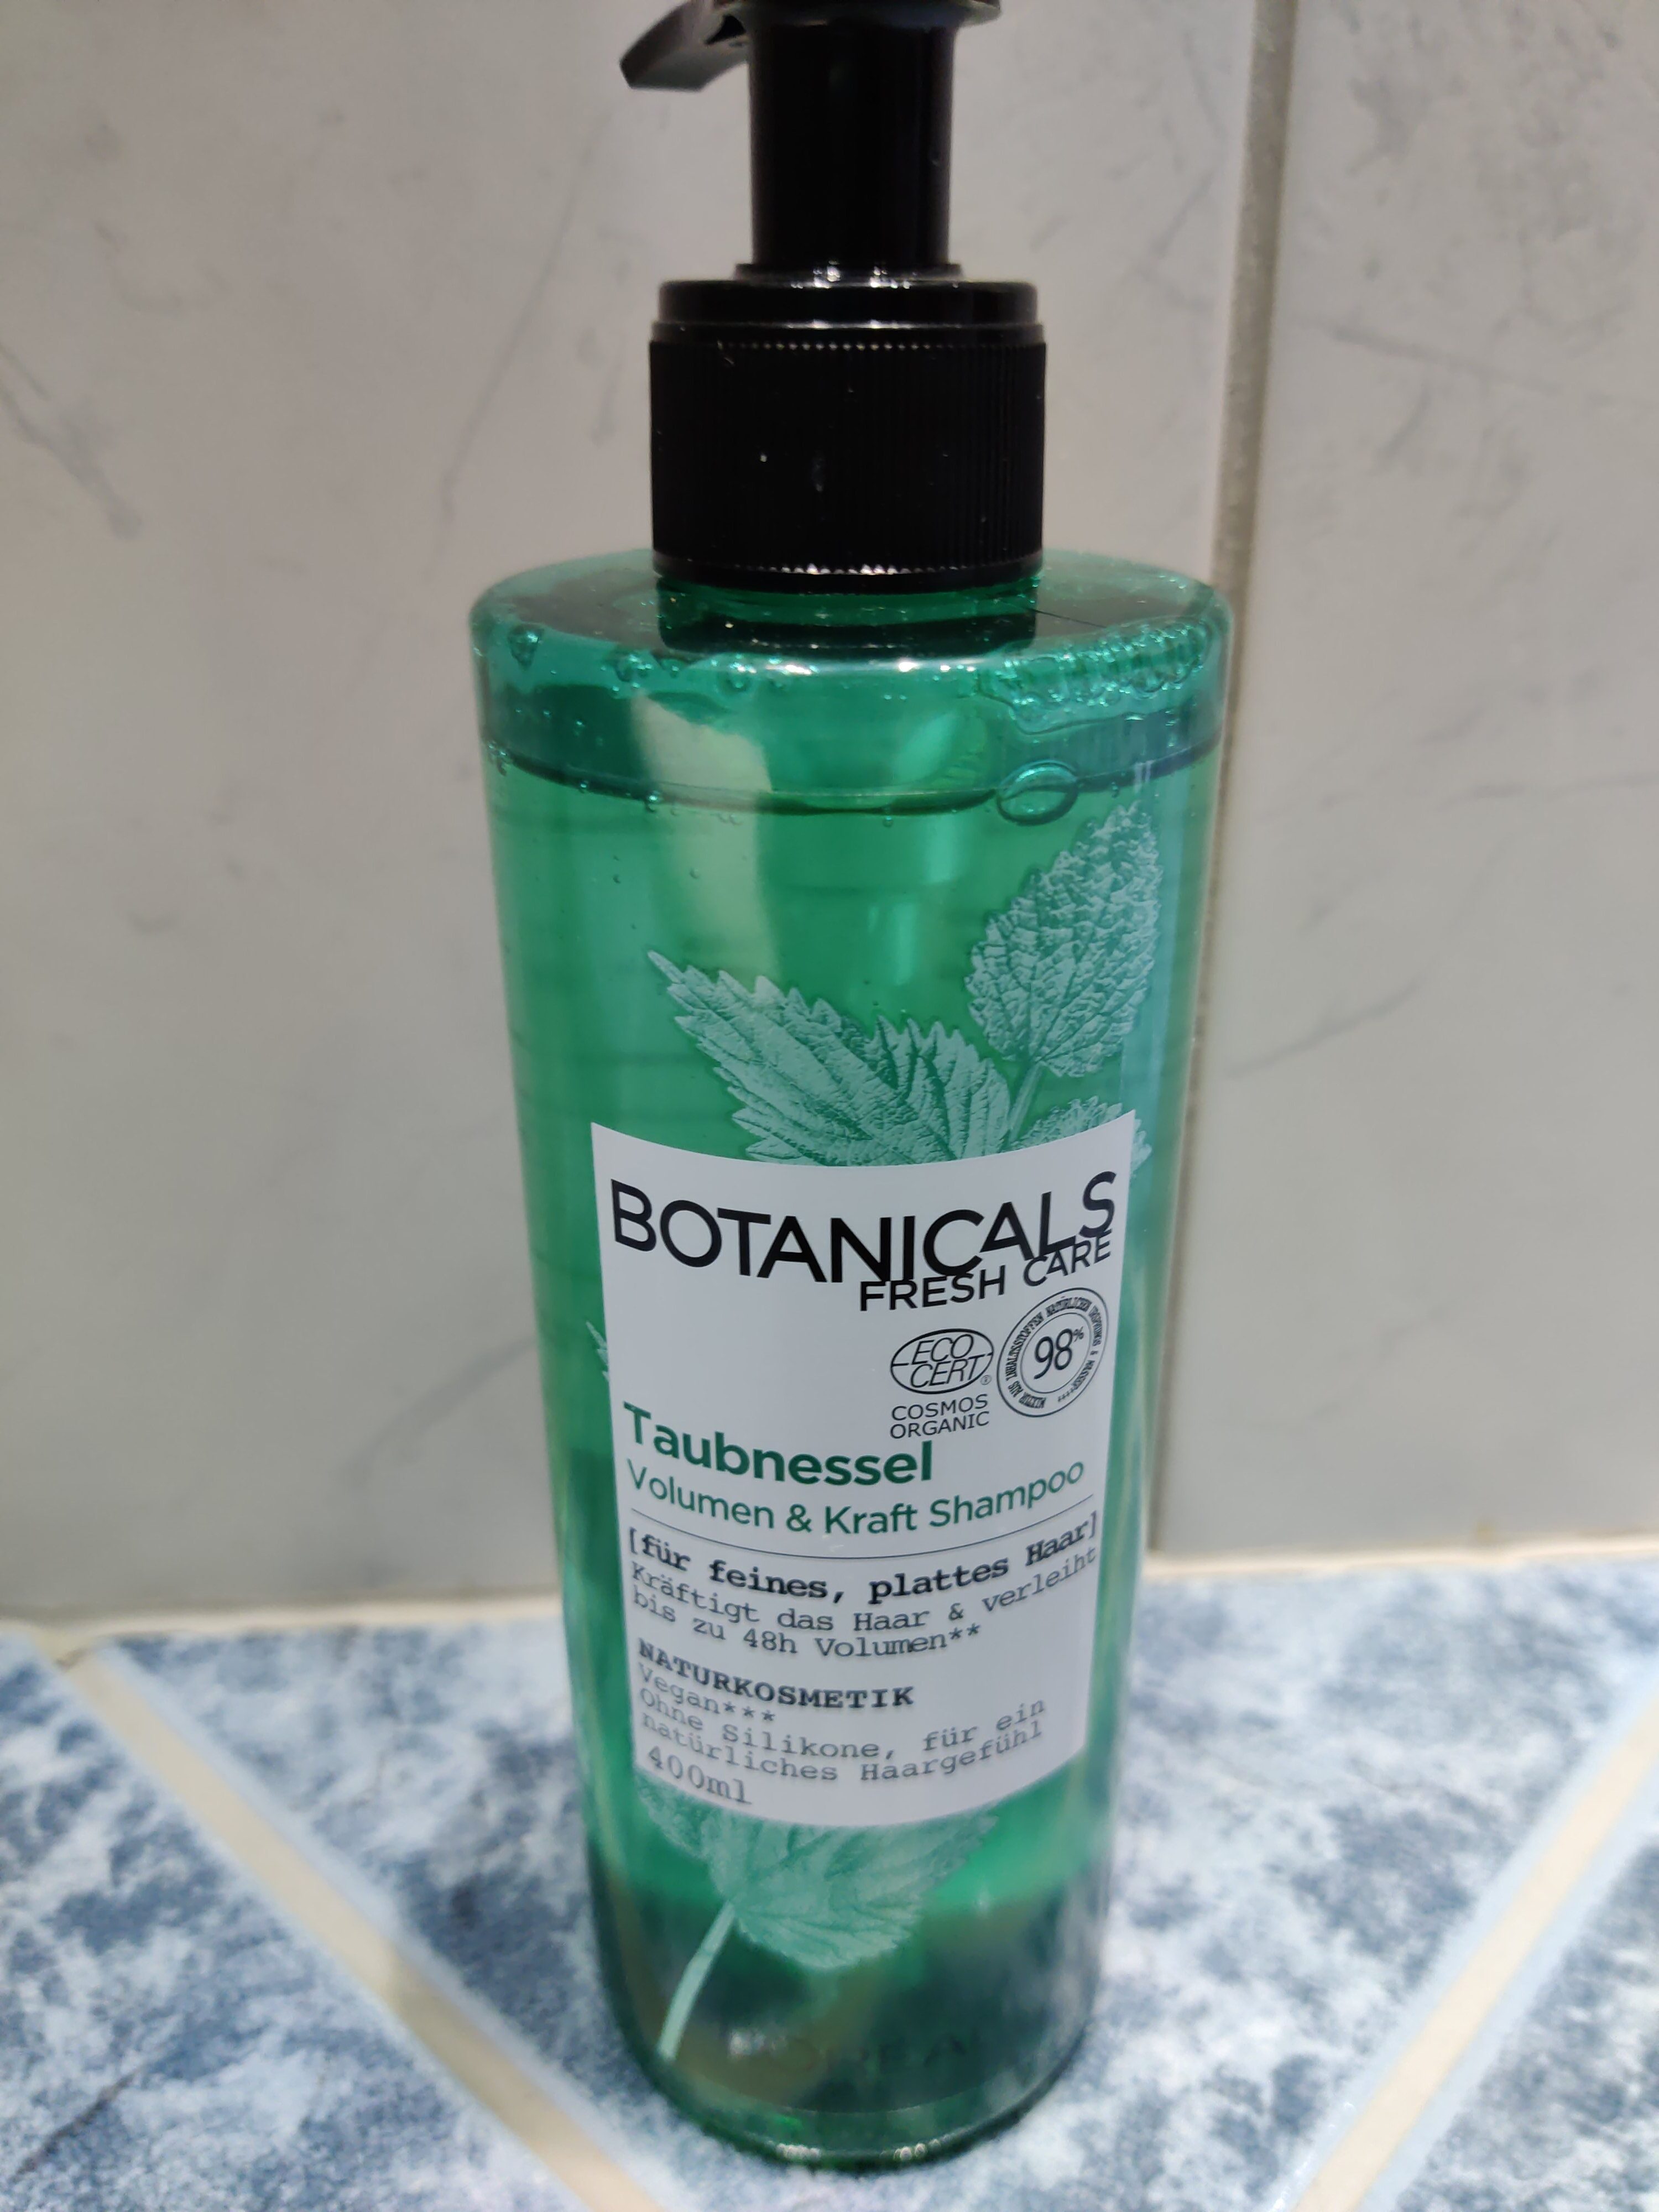 Botanicals Fresh Care Taubnessel Volumen & Kraft Shampoo - Produit - de